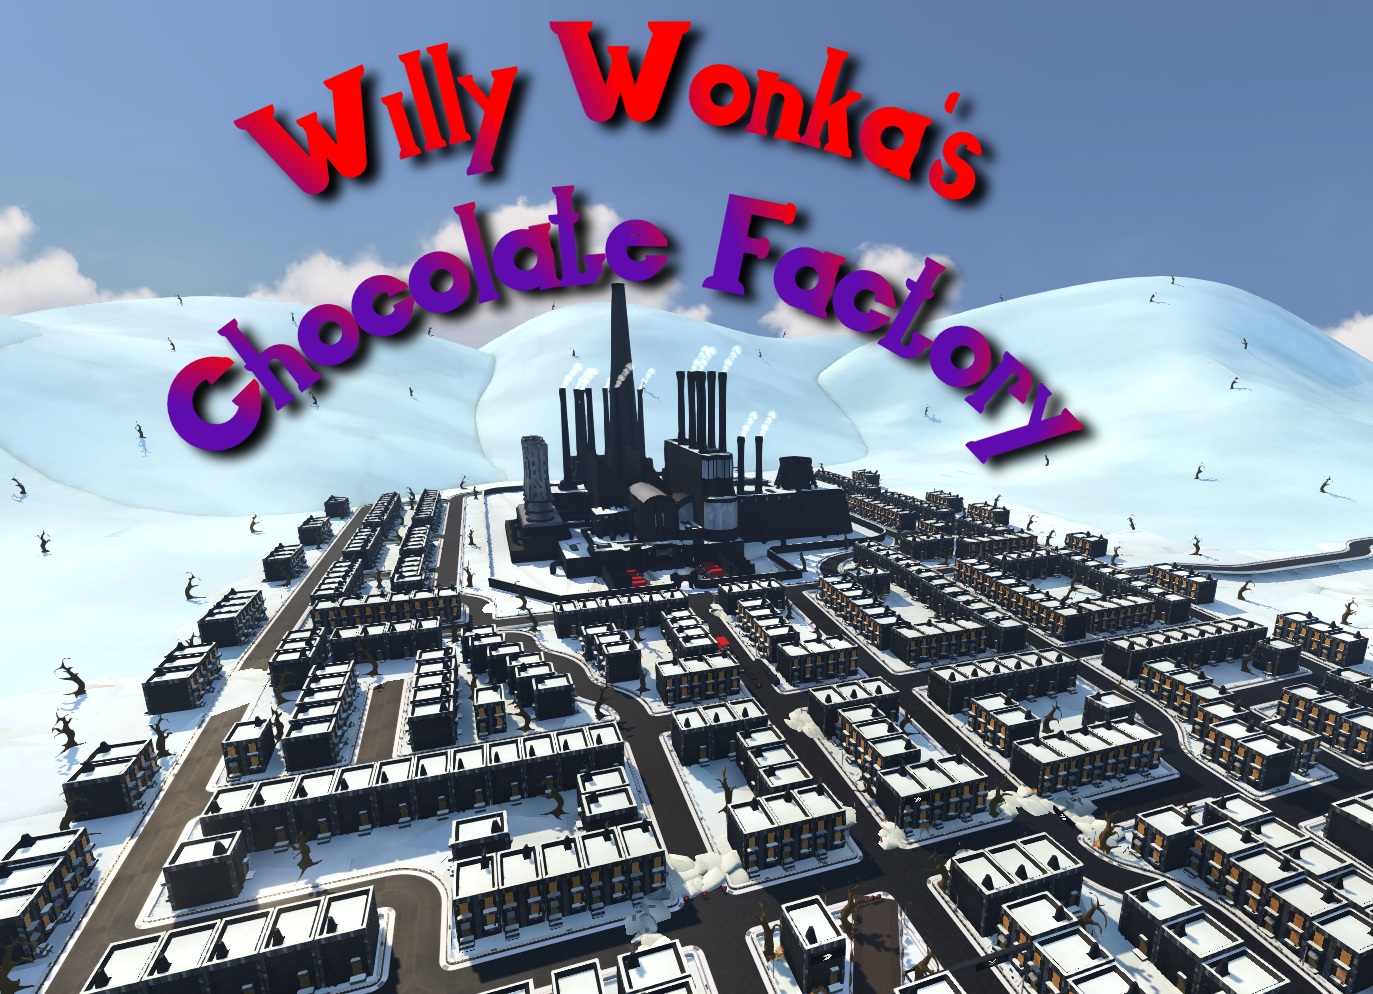 real wonka chocolate factory